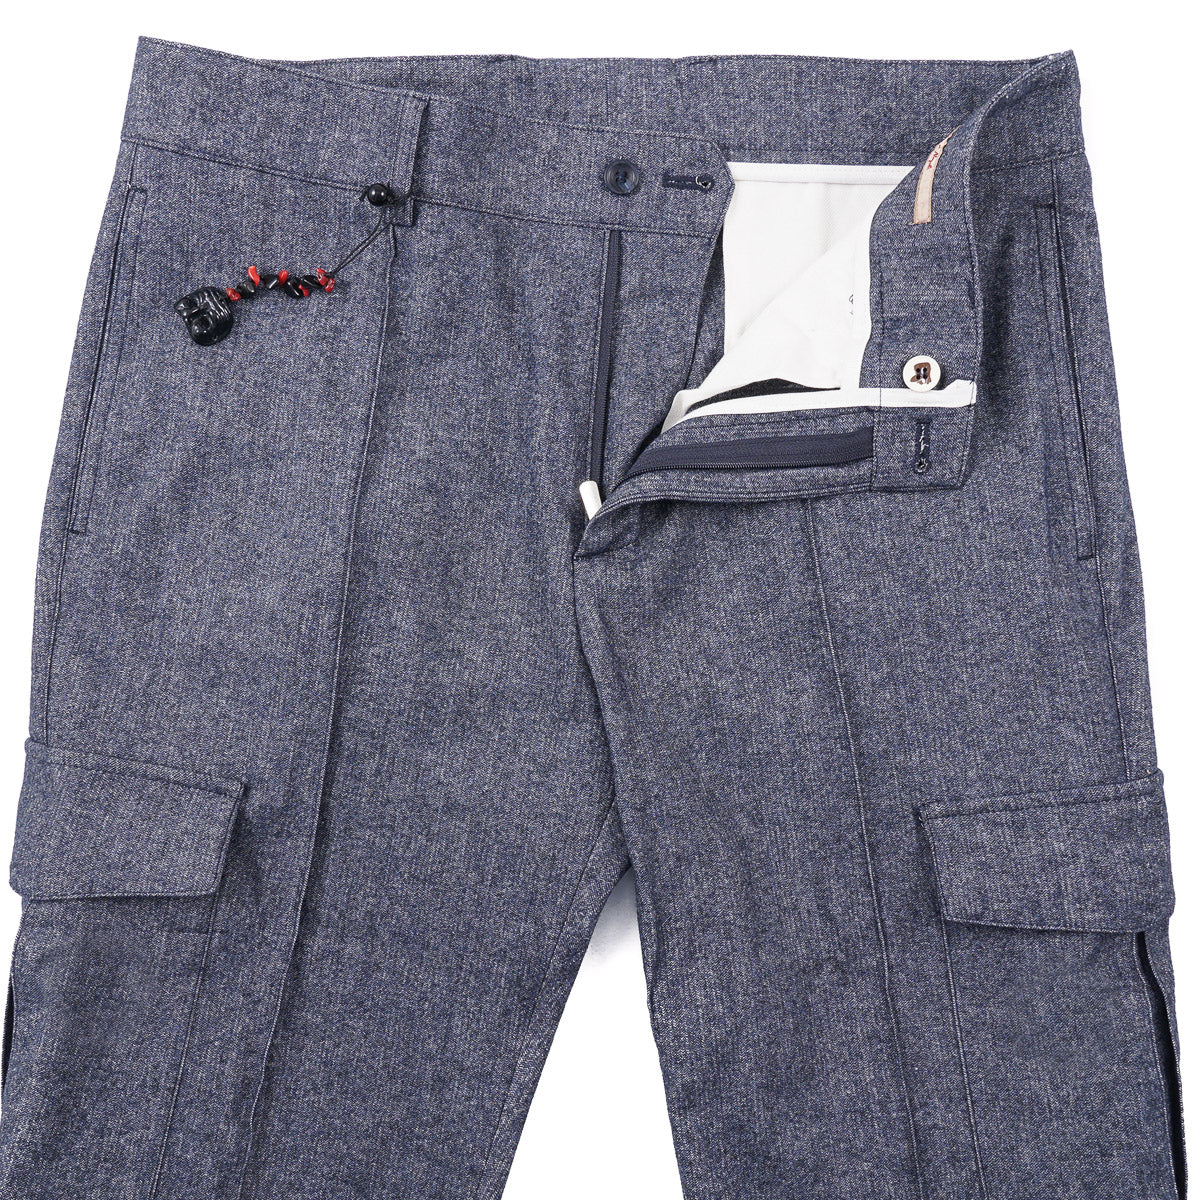 Marco Pescarolo Cashmere Cargo Pants - Top Shelf Apparel